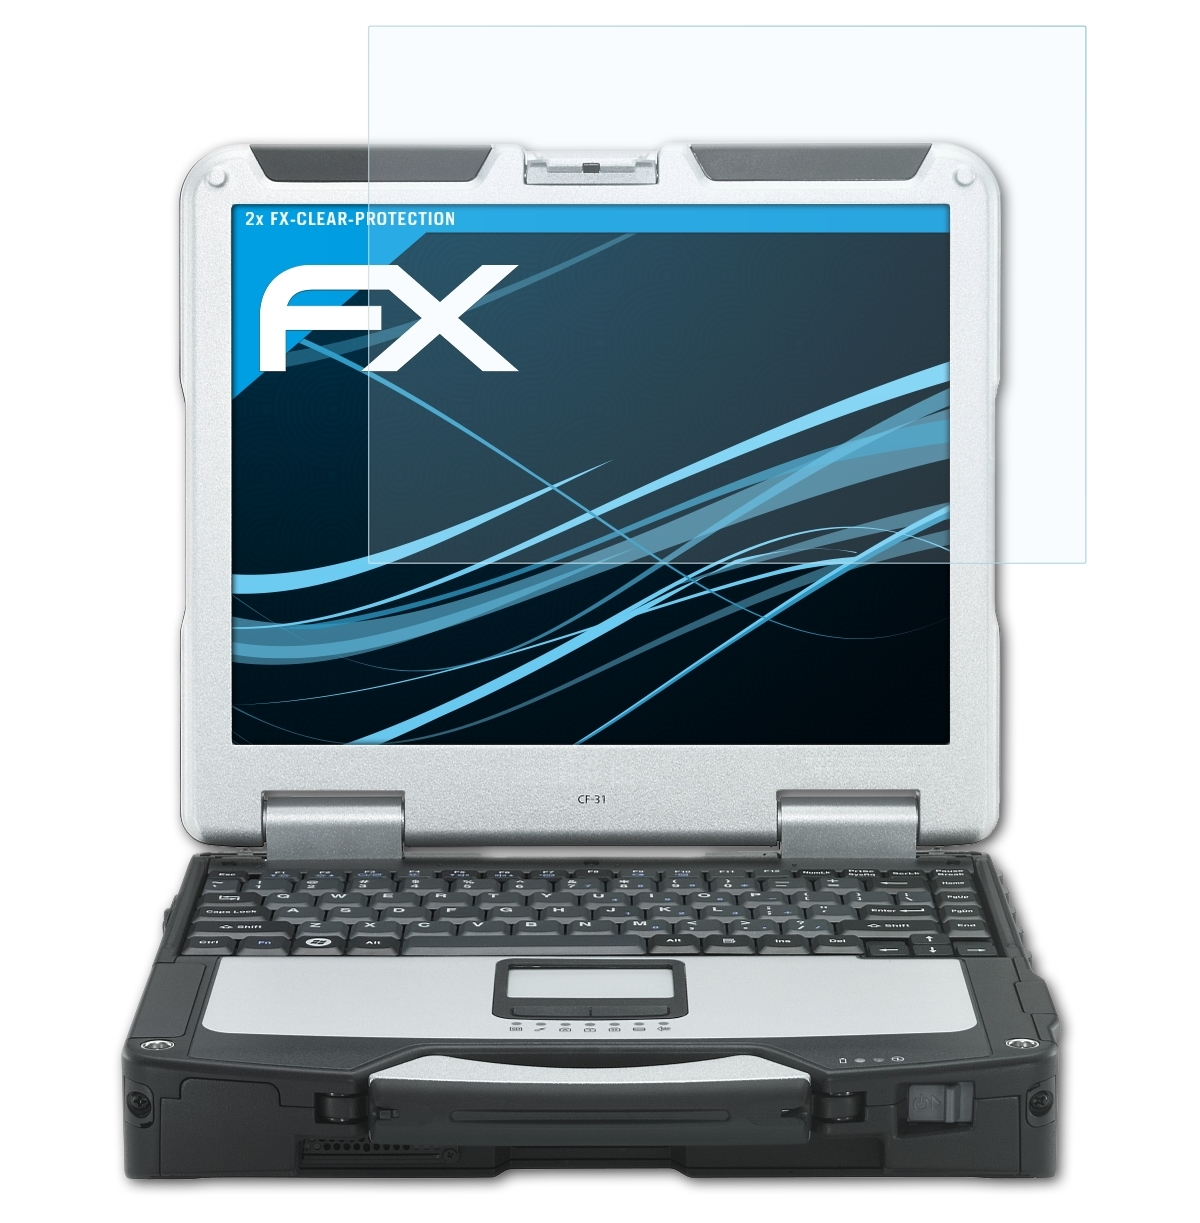 FX-Clear Panasonic ToughBook 2x Displayschutz(für CF-31) ATFOLIX